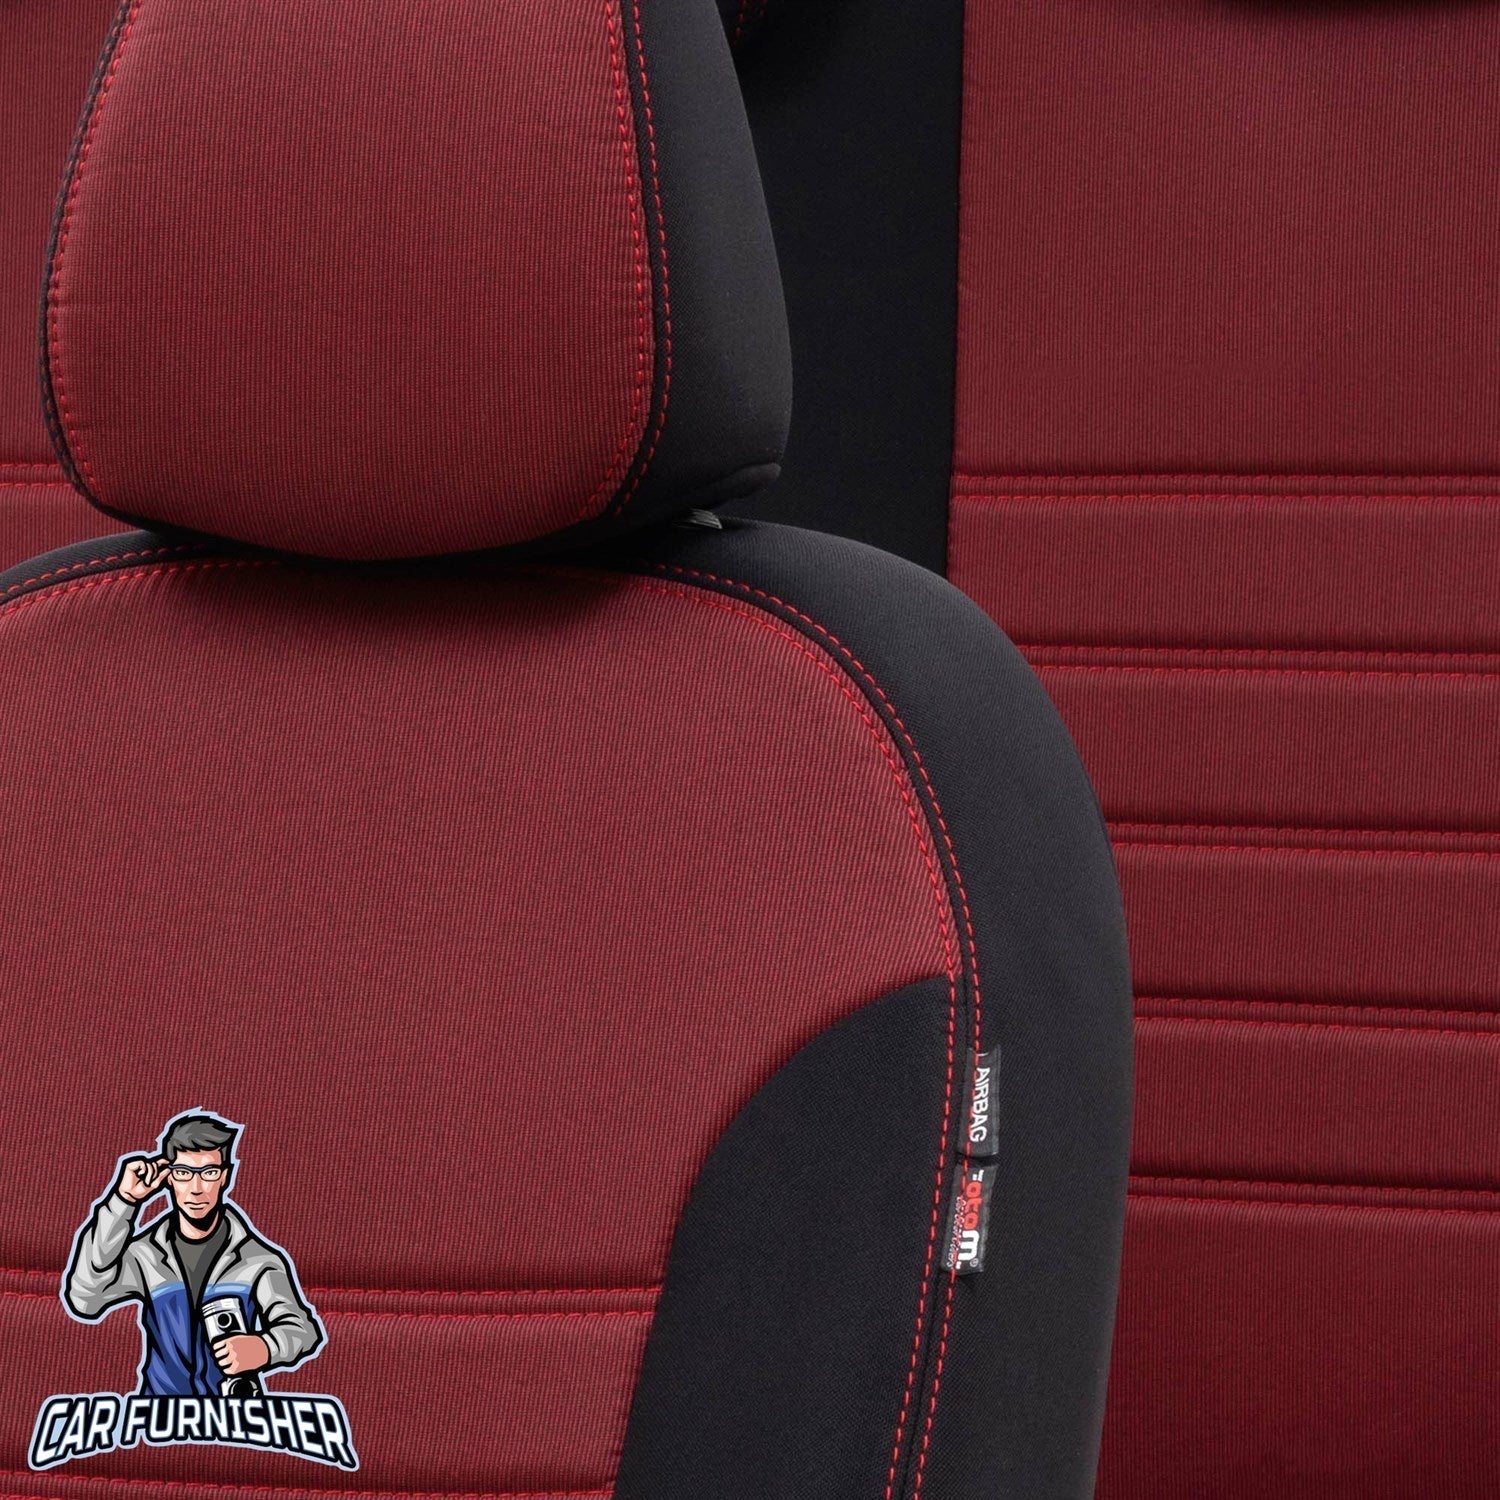 Mitsubishi Spacestar Seat Cover Original Jacquard Design Red Jacquard Fabric